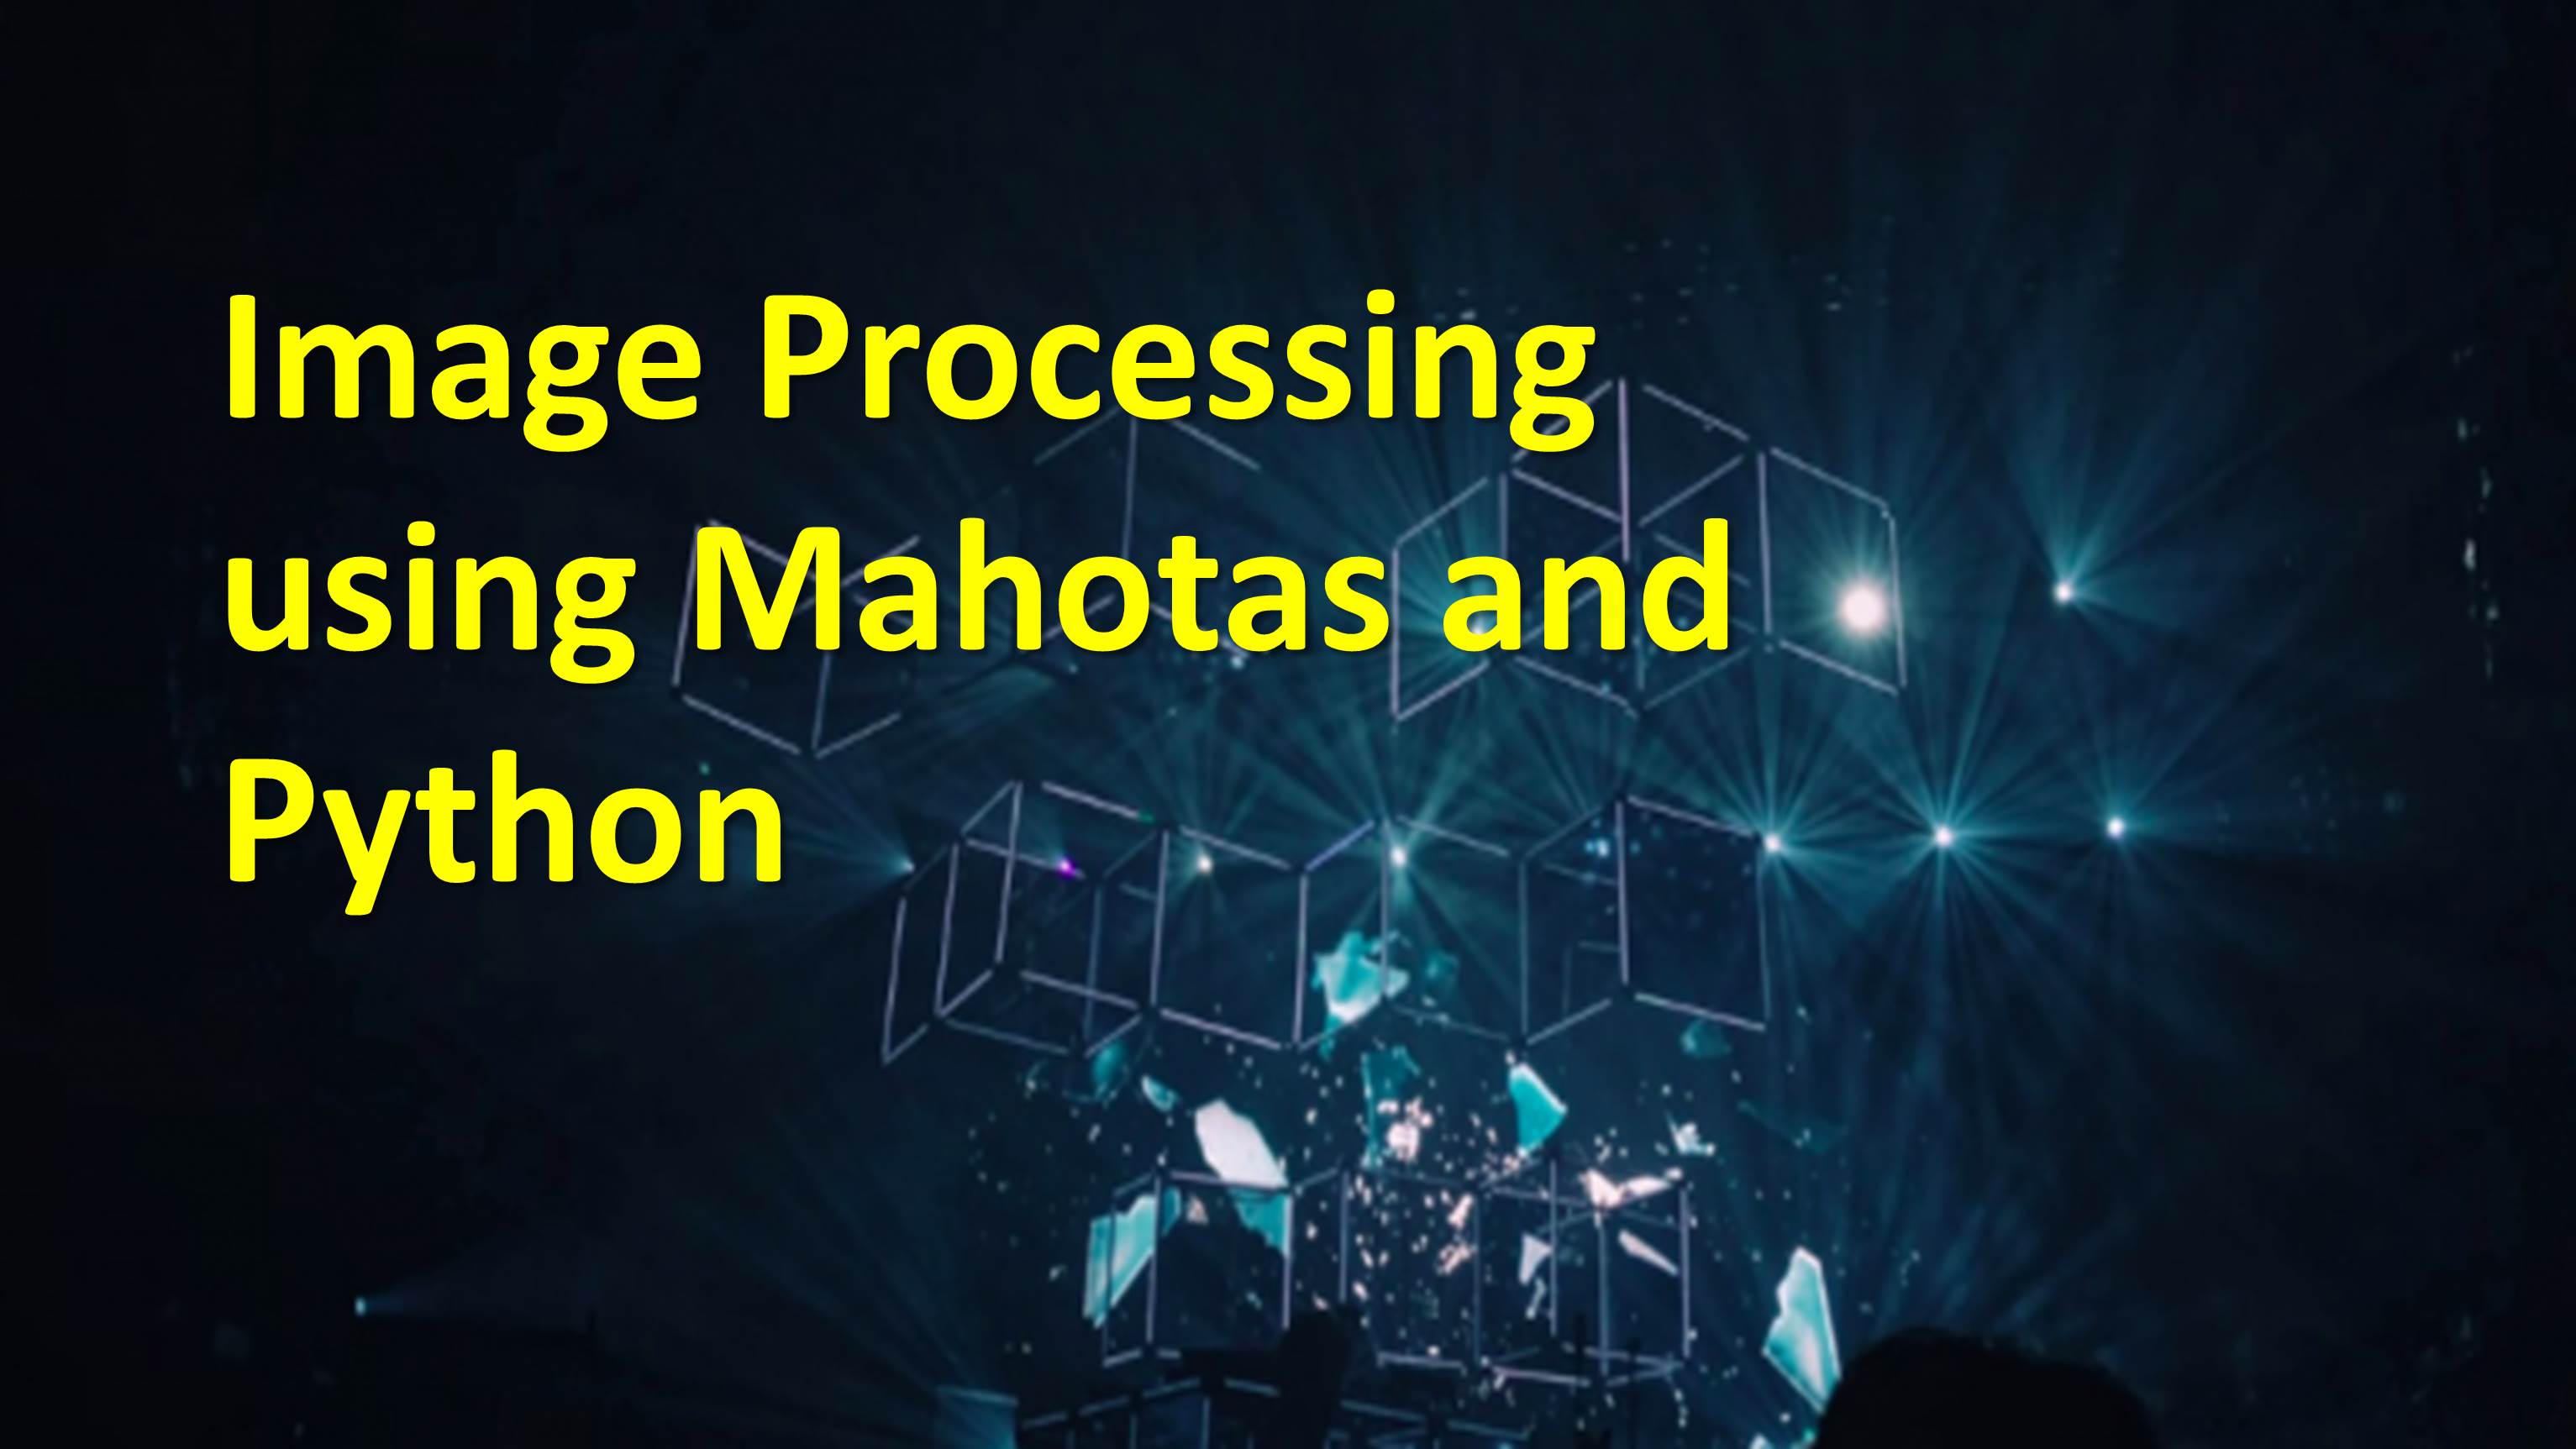 Image Processing using Mahotas and Python